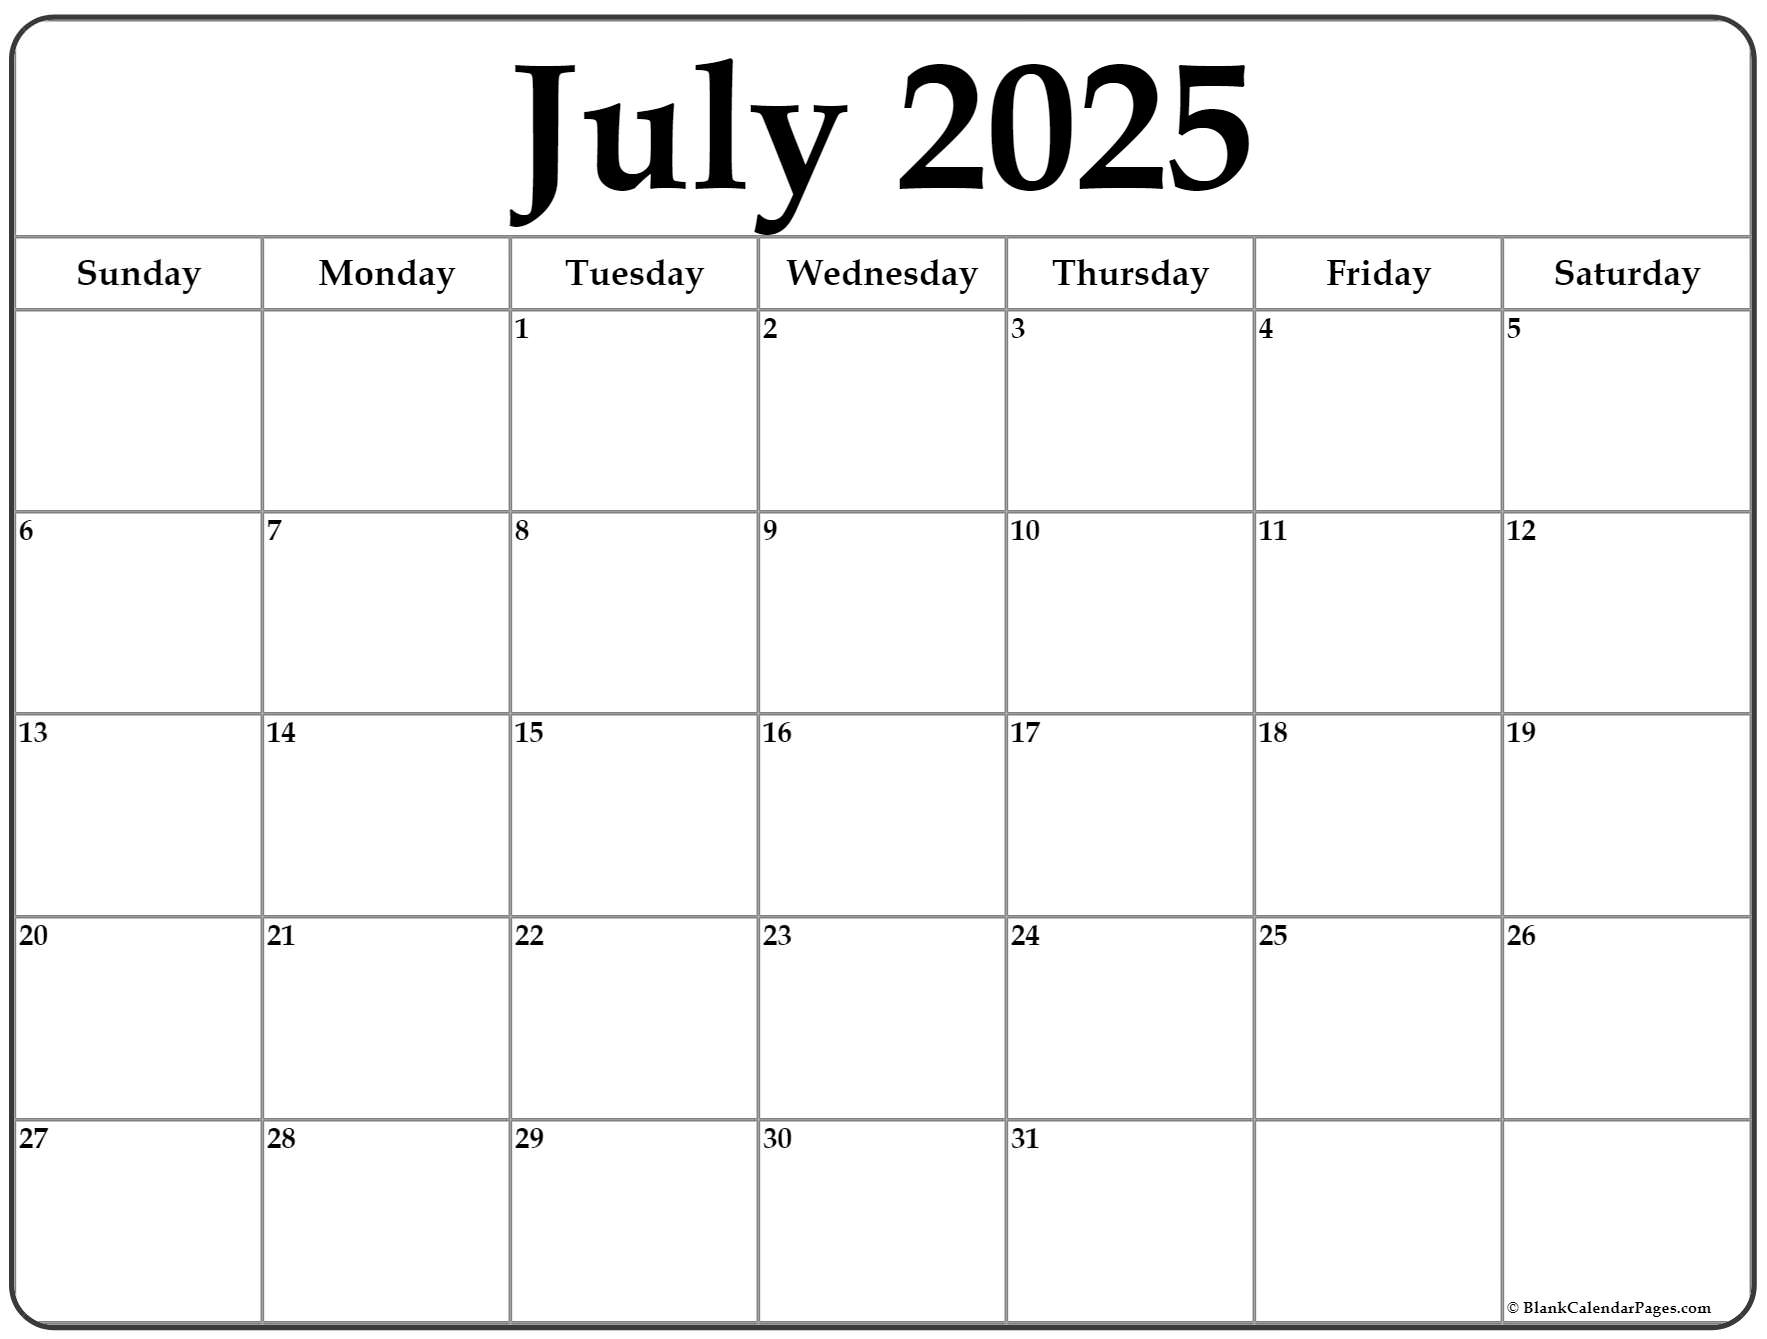 July 2025 calendar free printable calendar